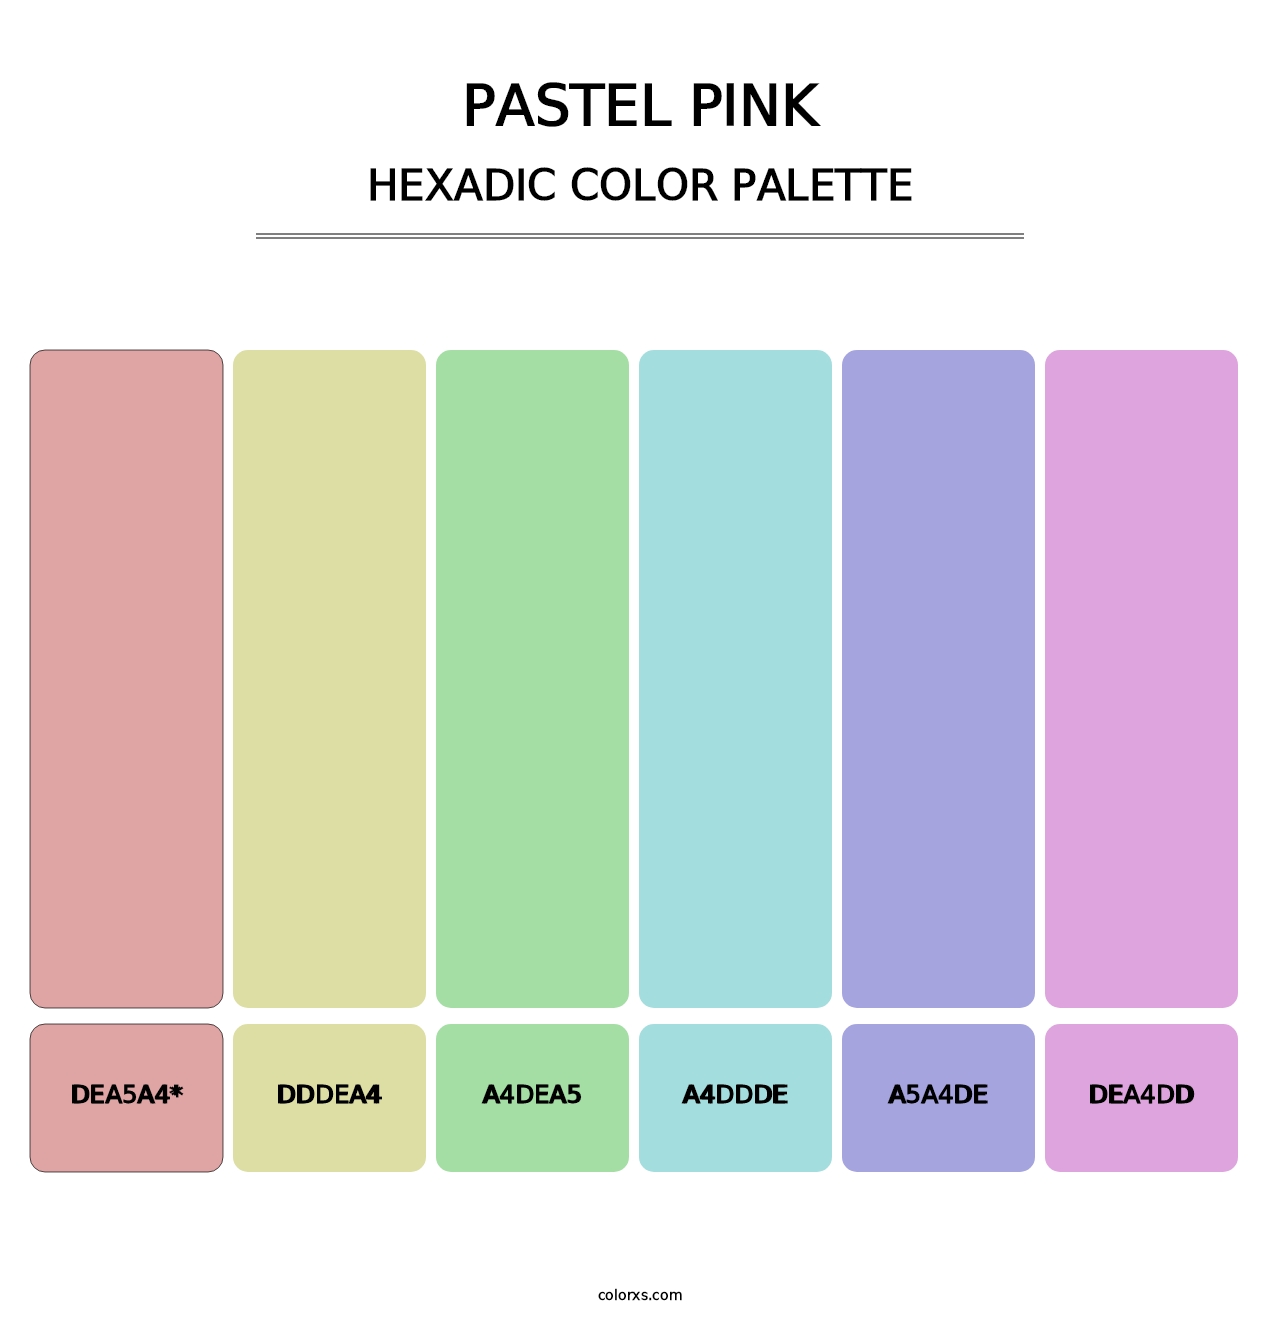 Pastel Pink - Hexadic Color Palette